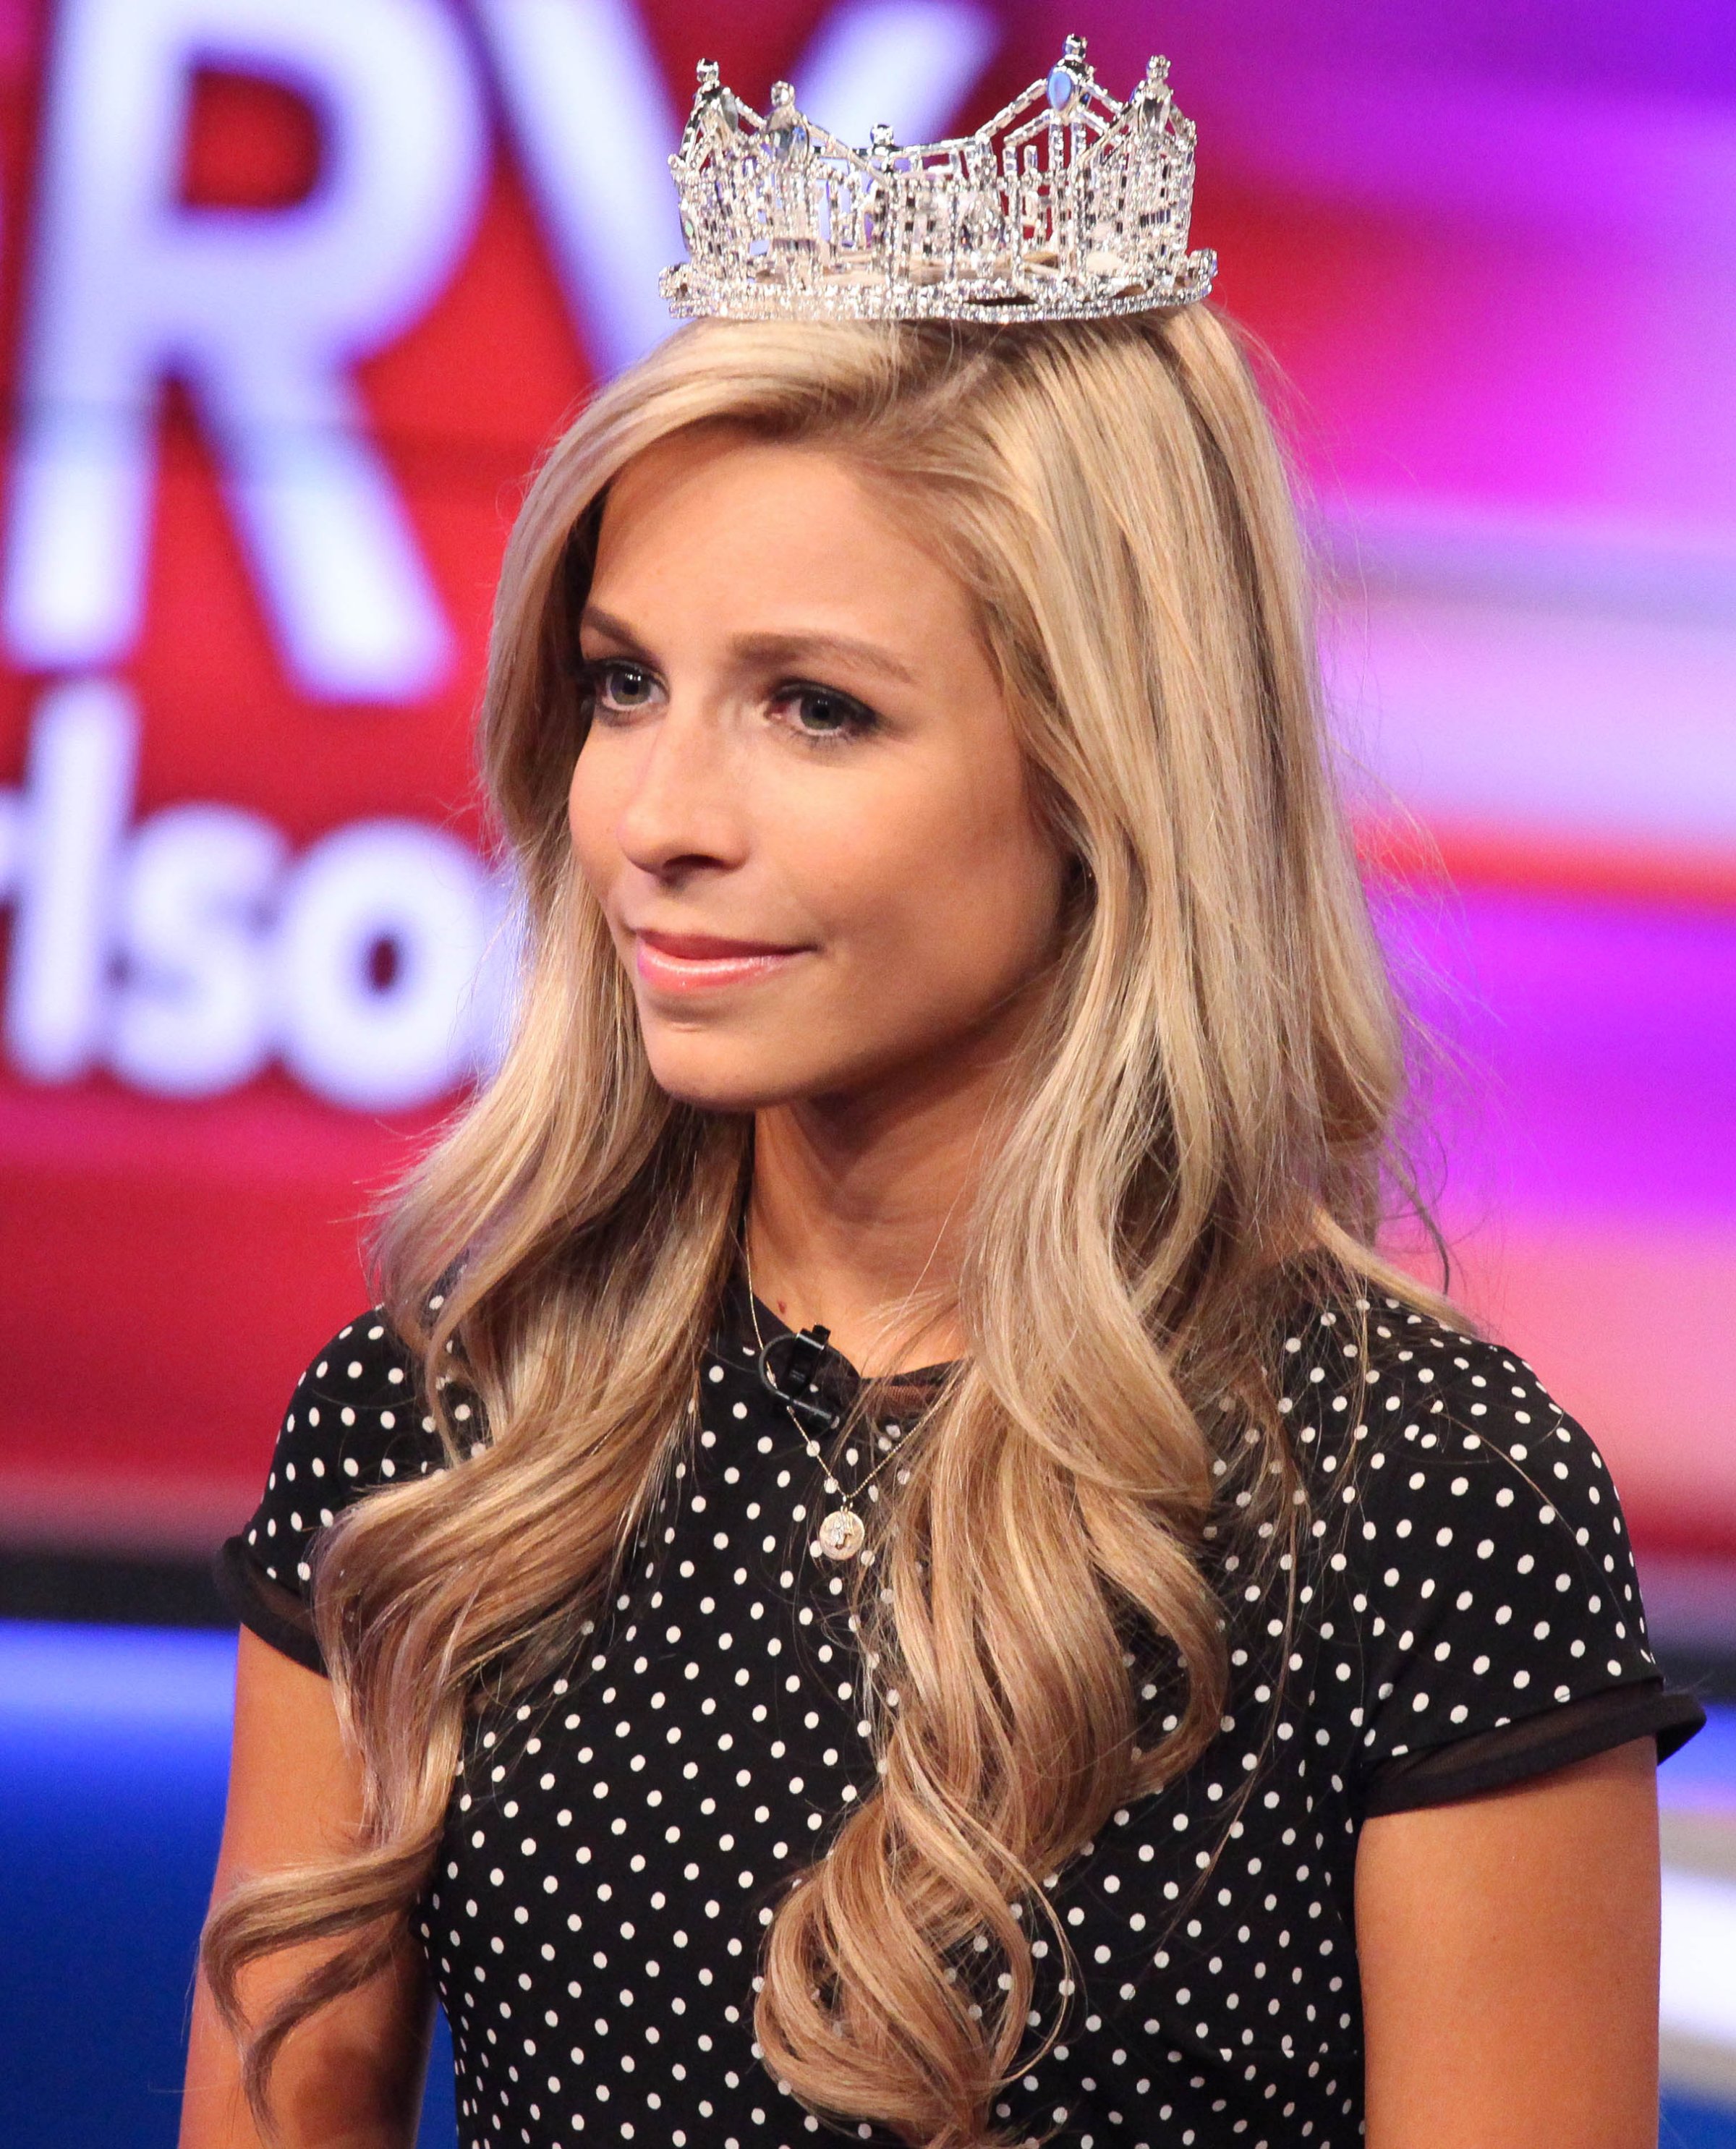 FOX News Anchor Gretchen Carlson Interviews Miss America 2015 Kira Kazantsev